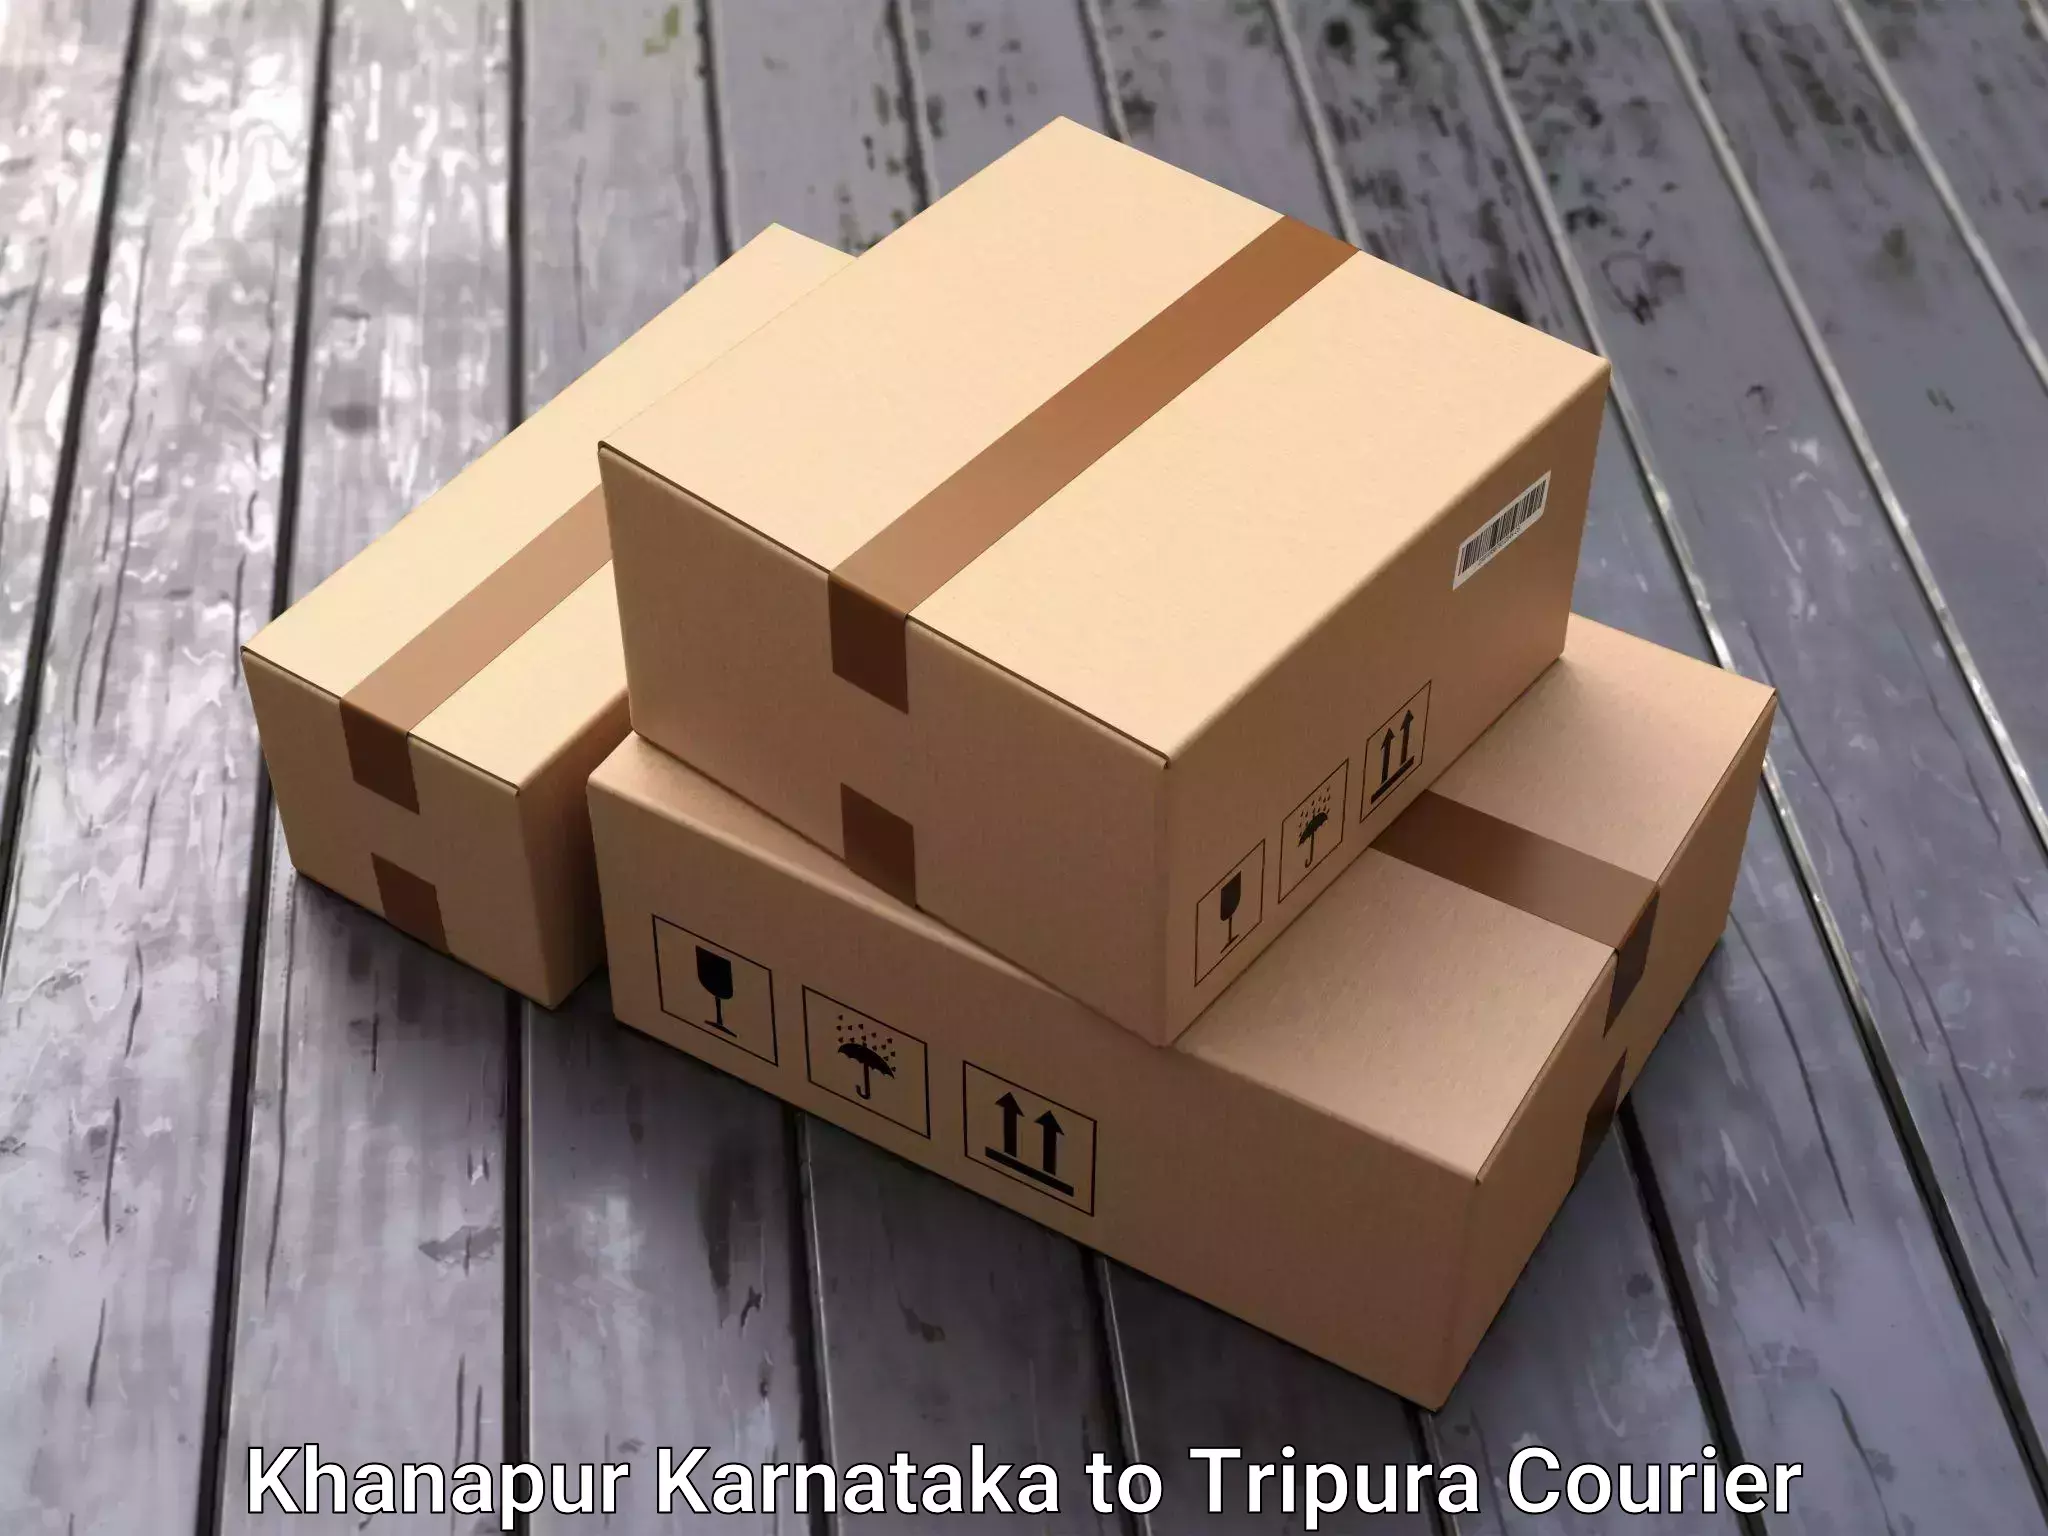 Affordable relocation solutions Khanapur Karnataka to Udaipur Tripura